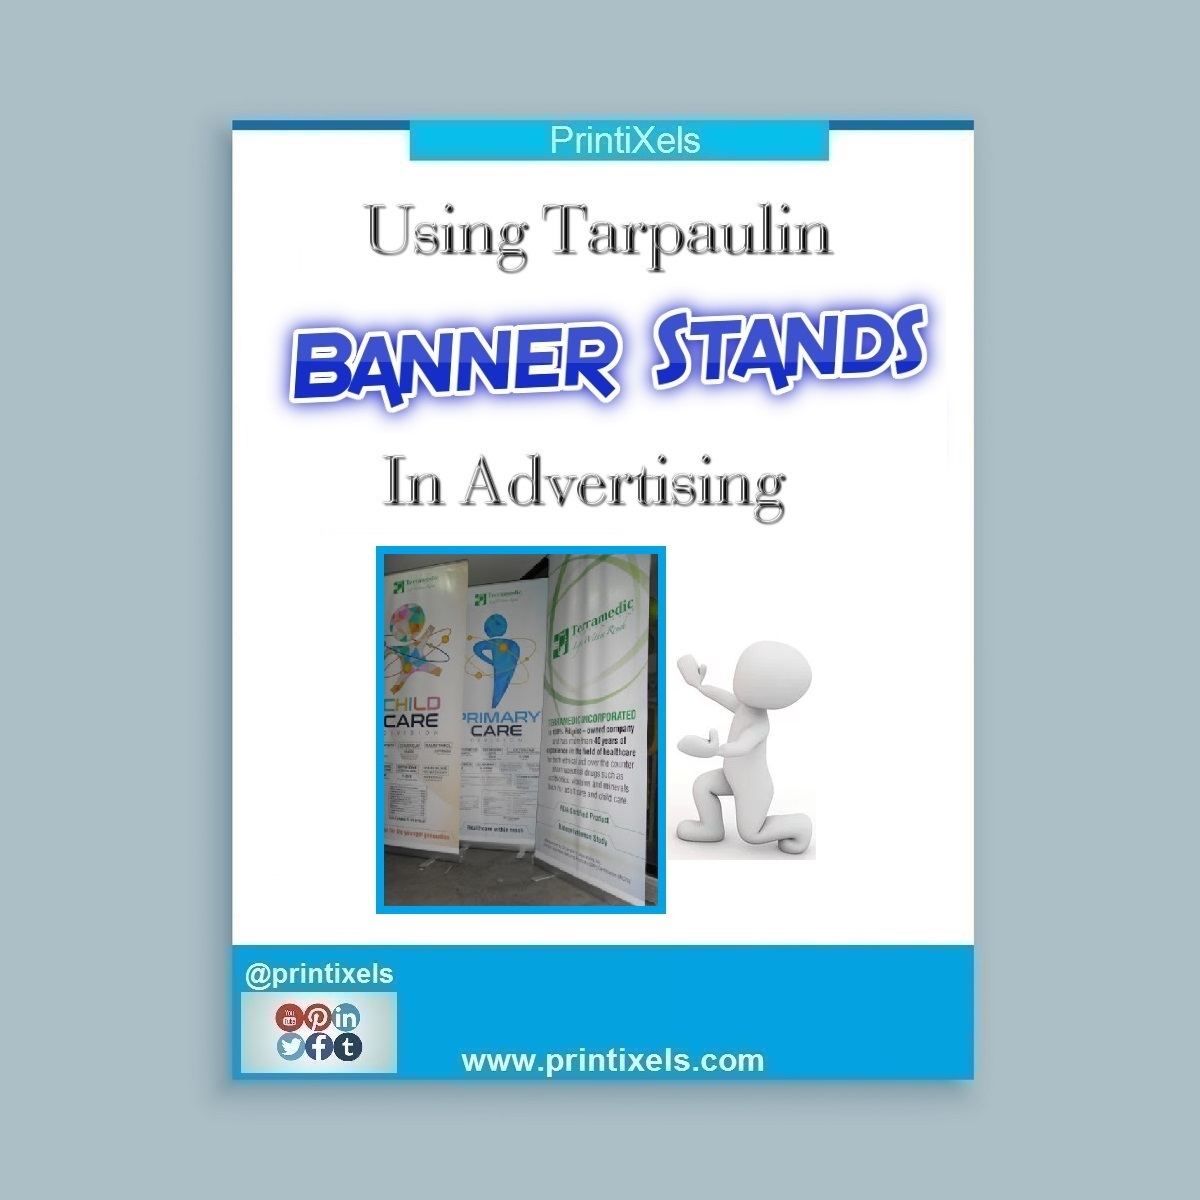 Using Tarpaulin Banner Stands In Advertising